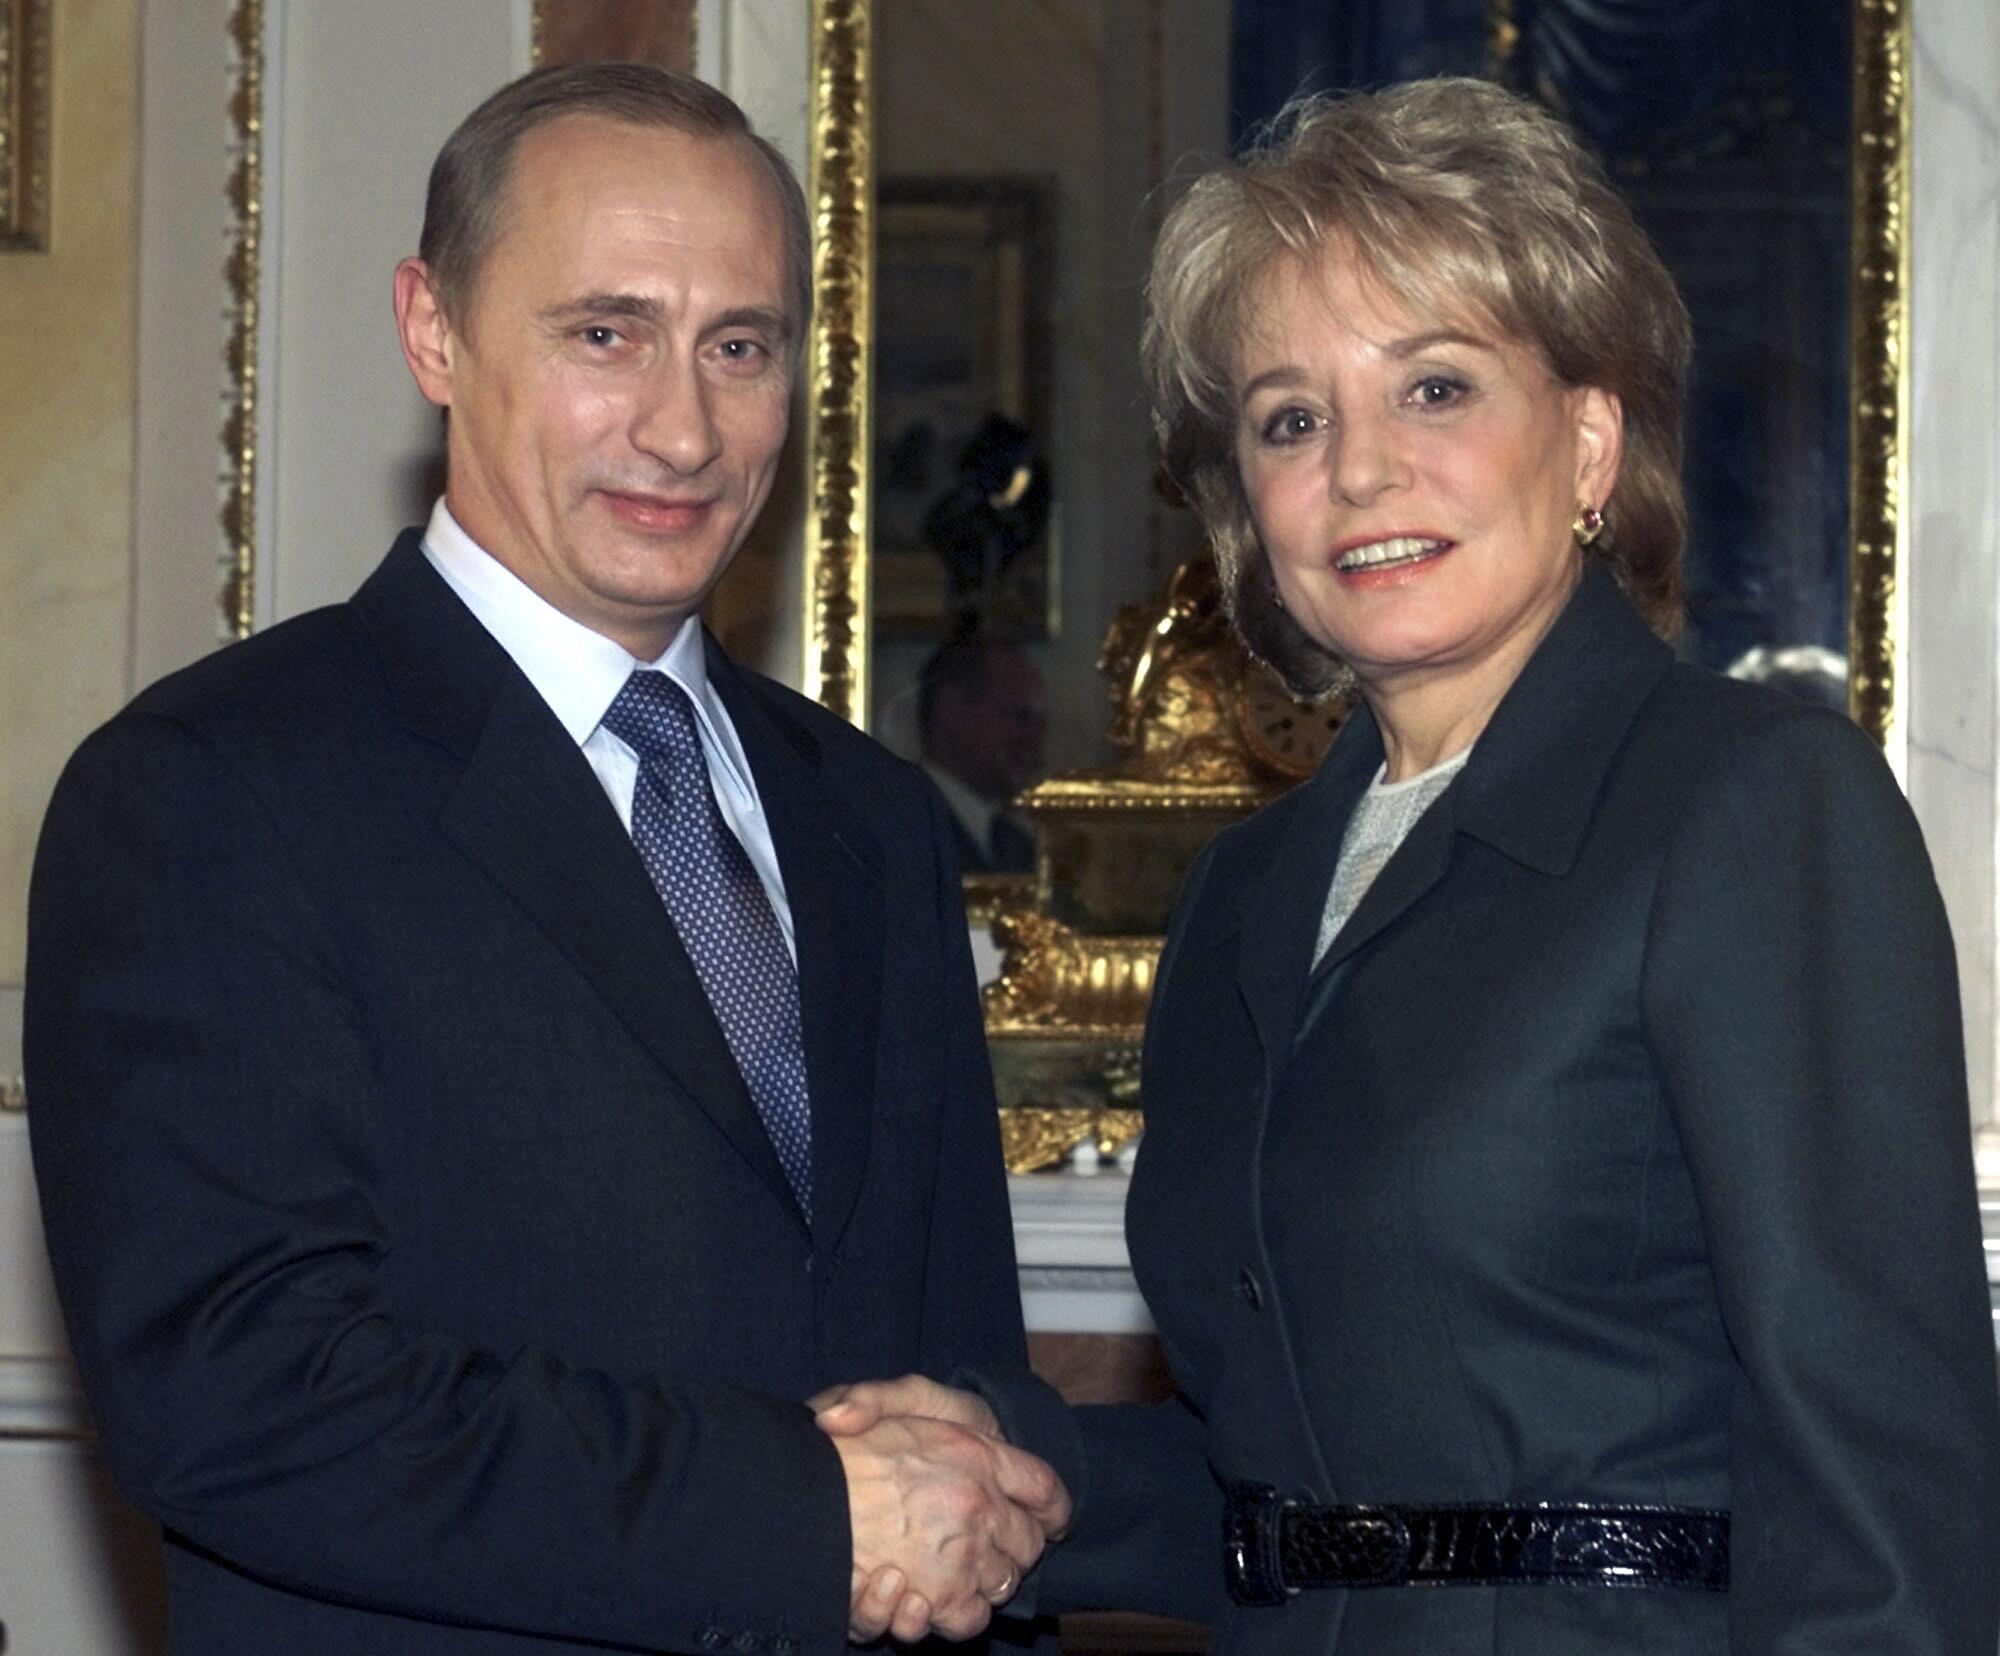  Russian President Vladimir Putin shakes hands with Barbara Walters 